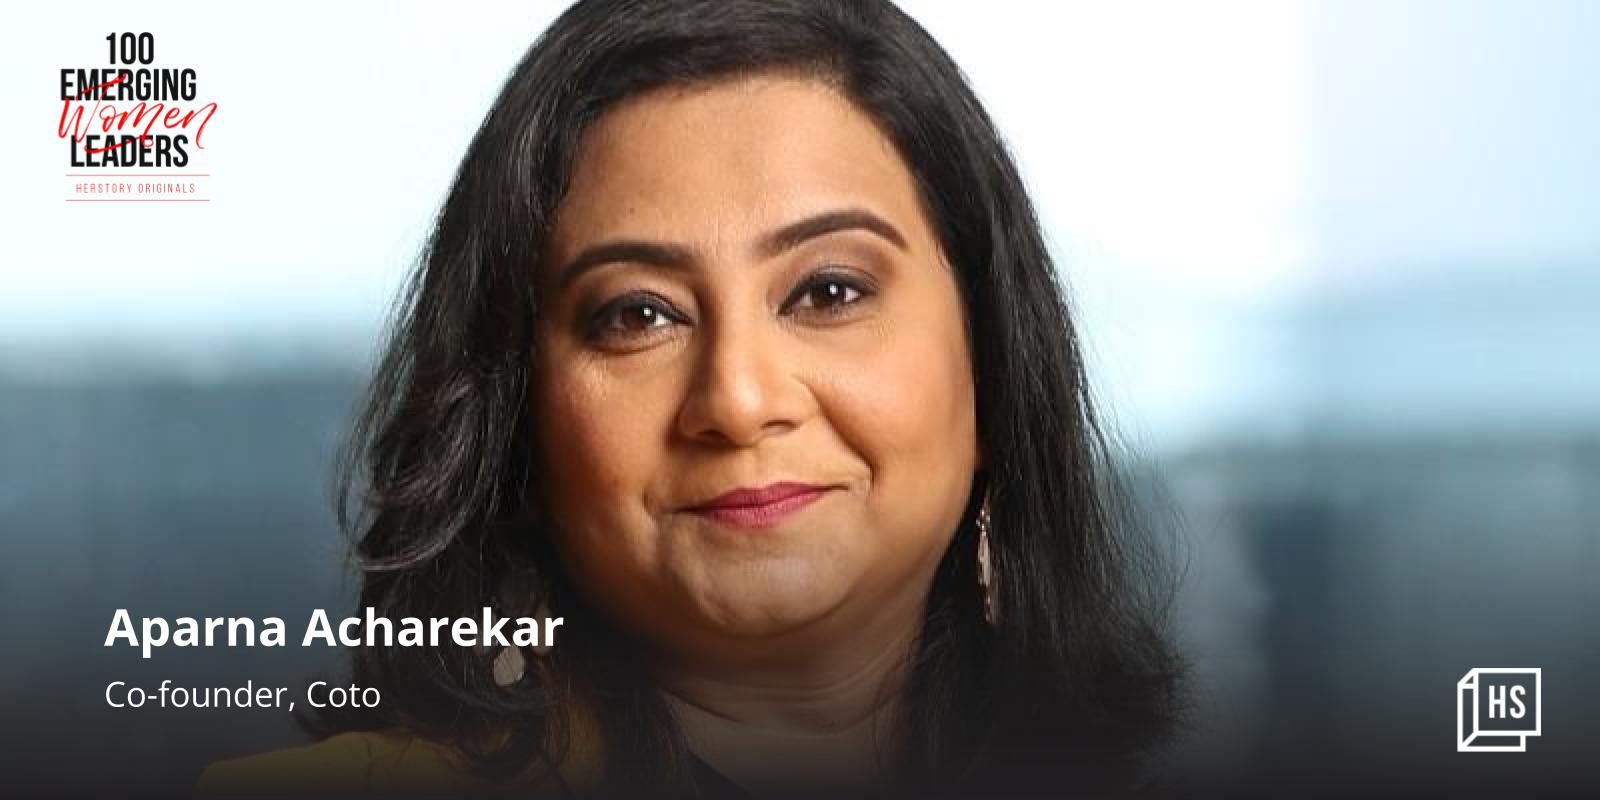 [100 Emerging Women Leaders] Aparna Acharekar is building a Web3-based community platform for women
